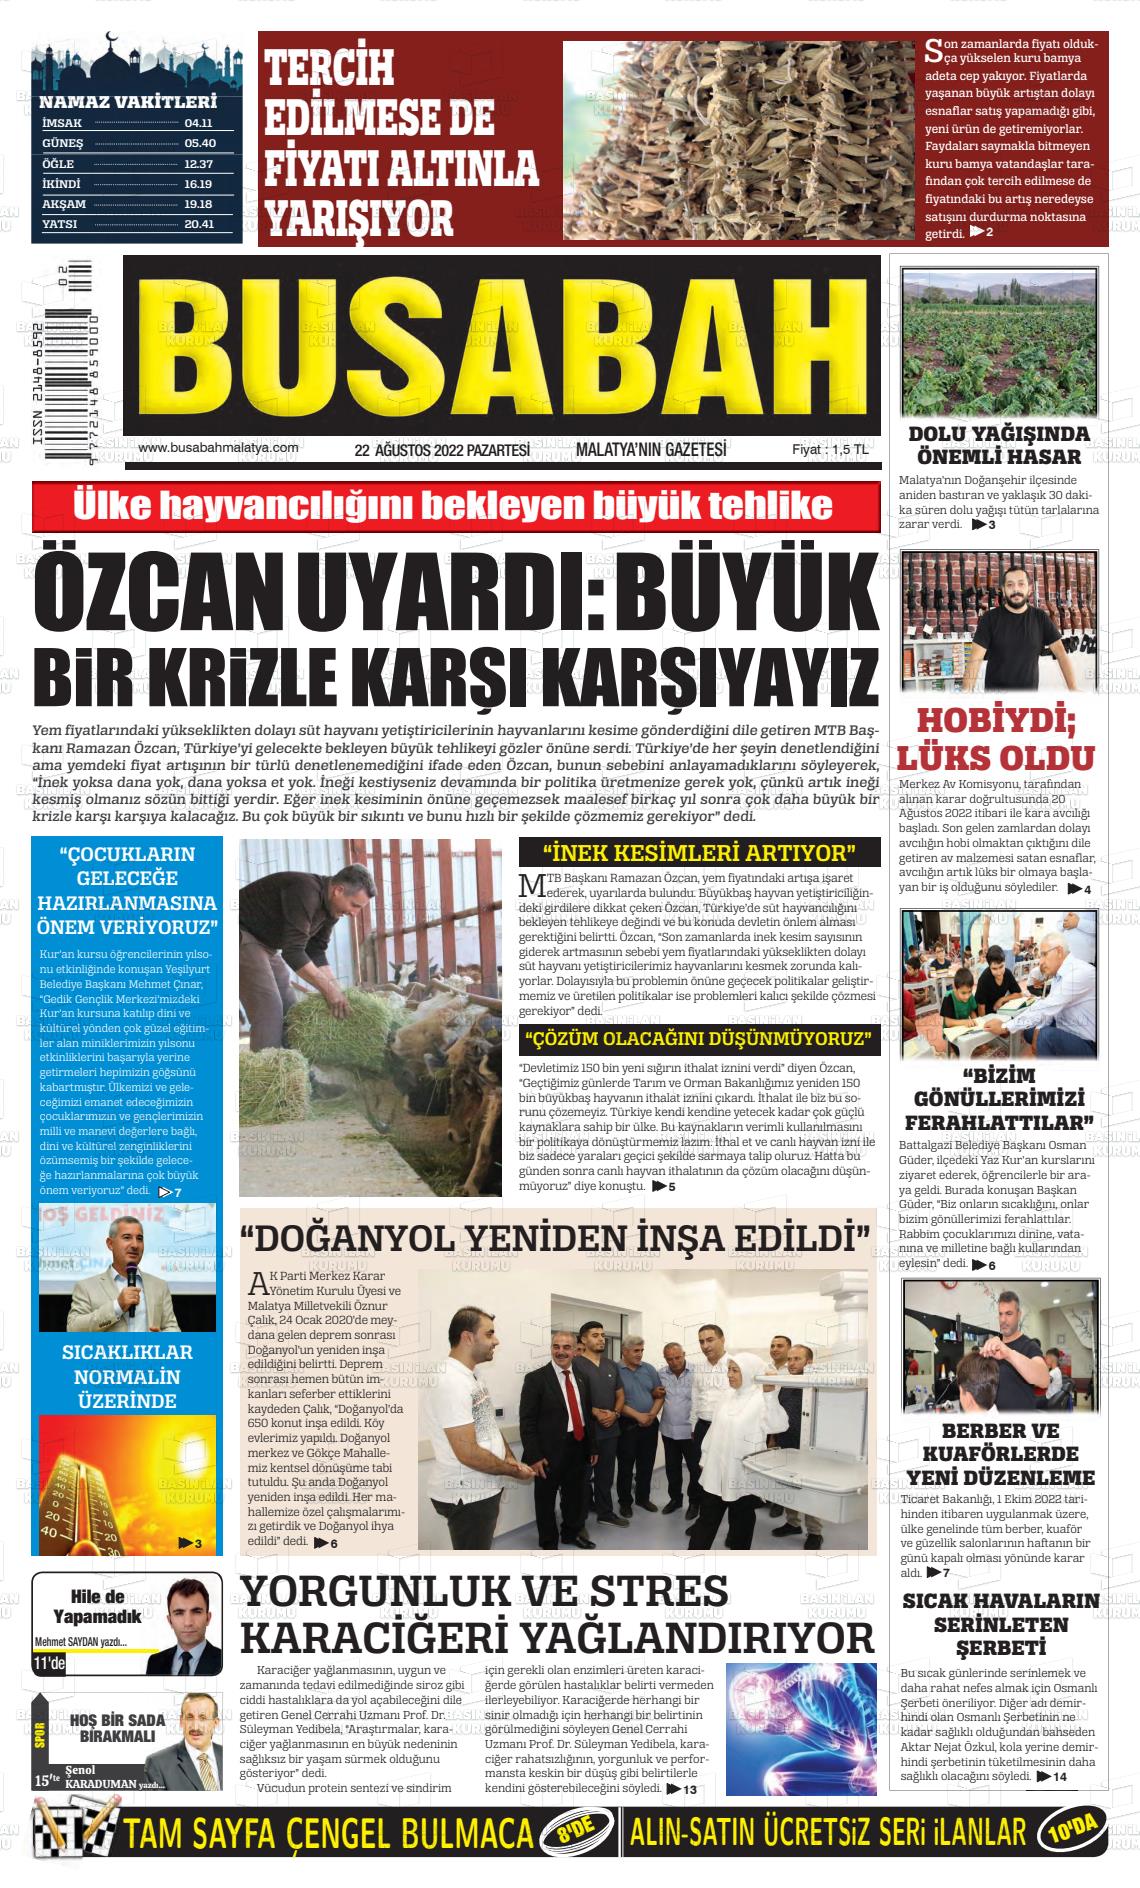 22 Ağustos 2022 BUSABAH Malatya Gazete Manşeti